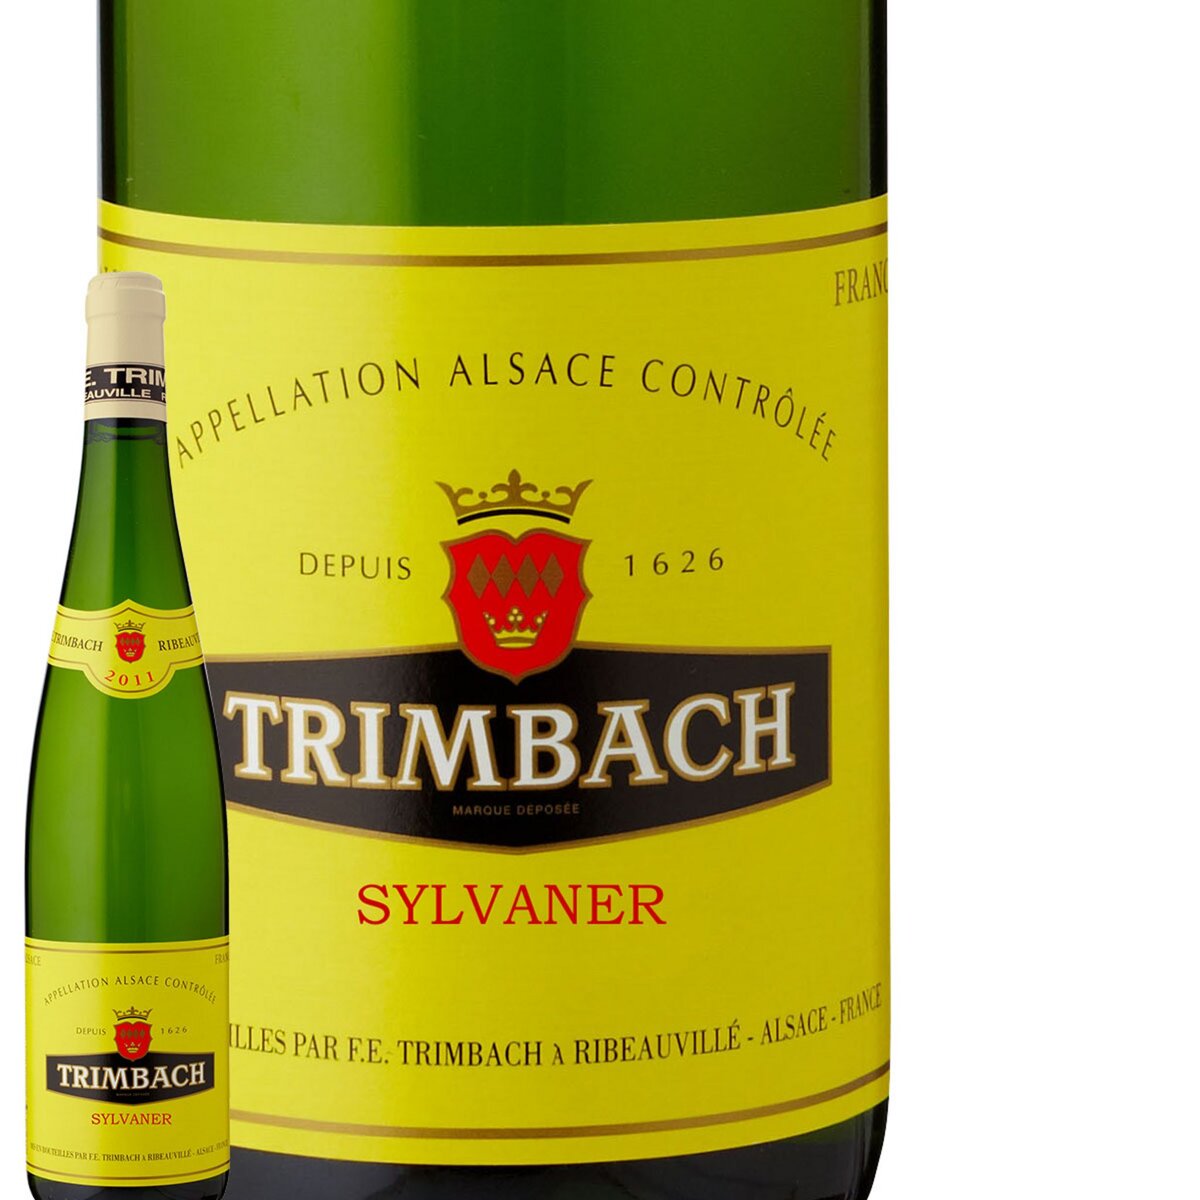 Trimbach Sylvaner Blanc 2011